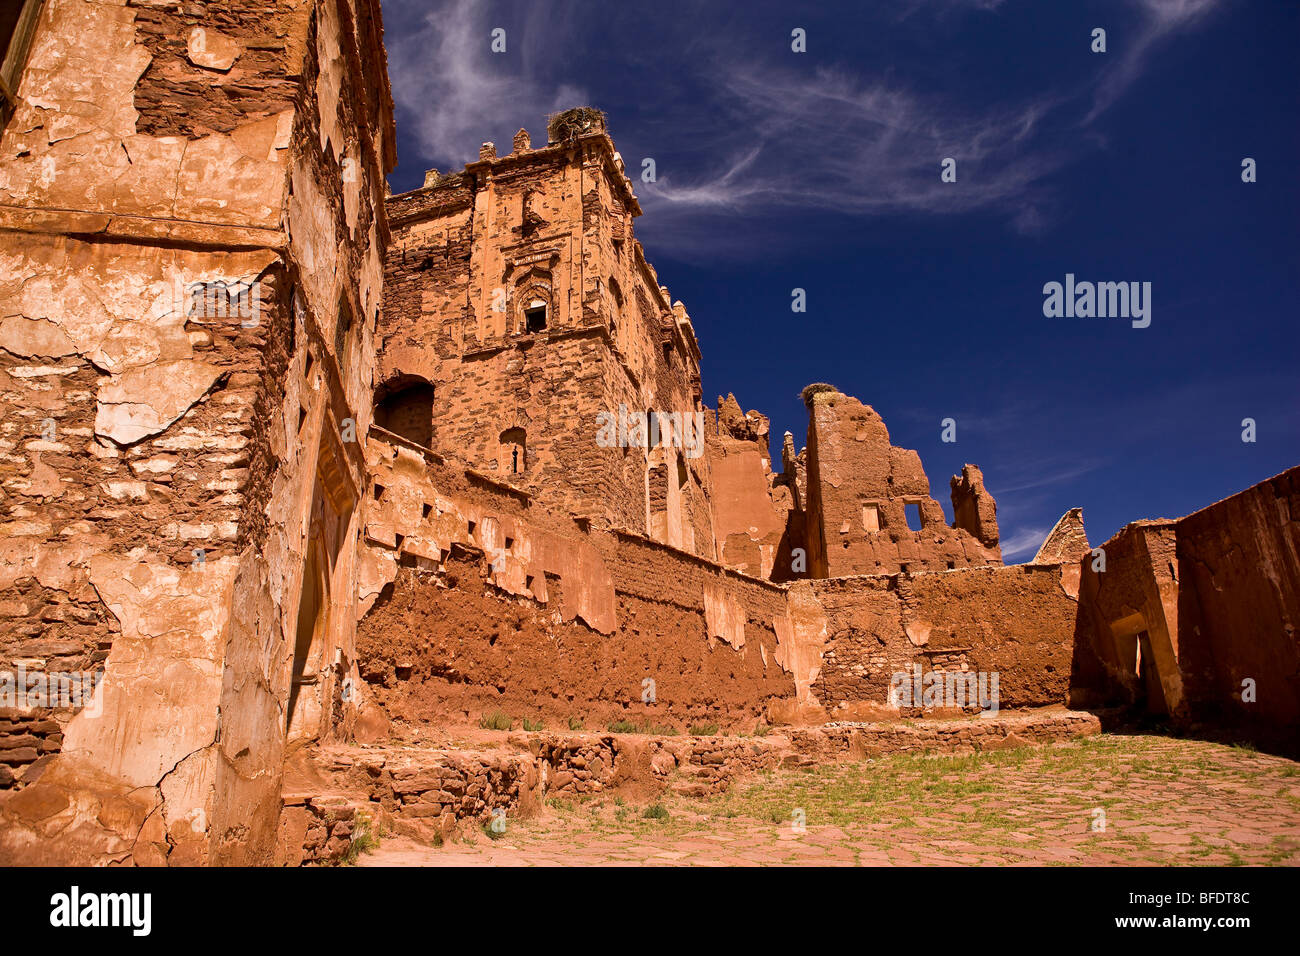 TELOUET, Marocco - Le rovine del Glaoui kasbah, nelle montagne Atlas. Foto Stock